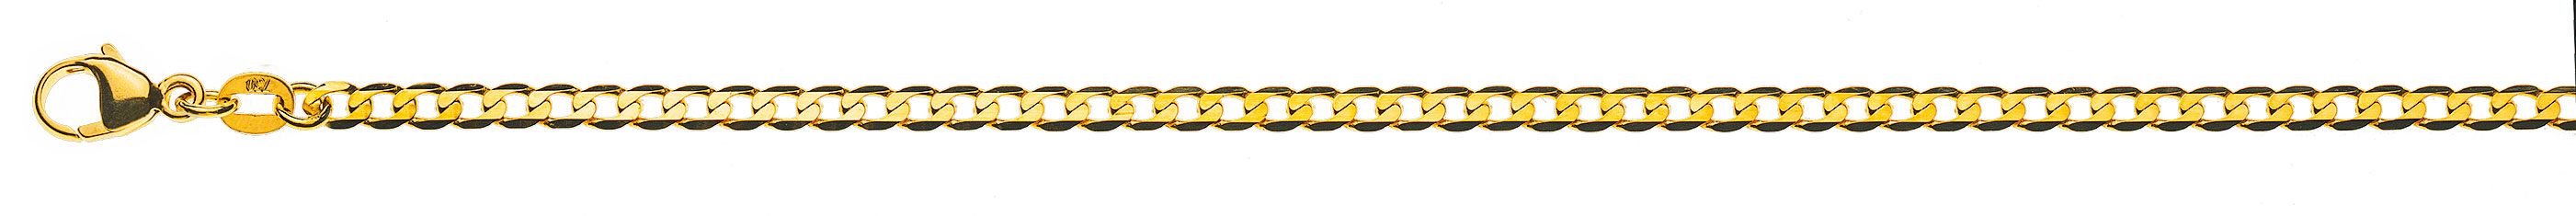 AURONOS Prestige Necklace yellow gold 18K curb chain extra flat diamond 42cm 3.1mm